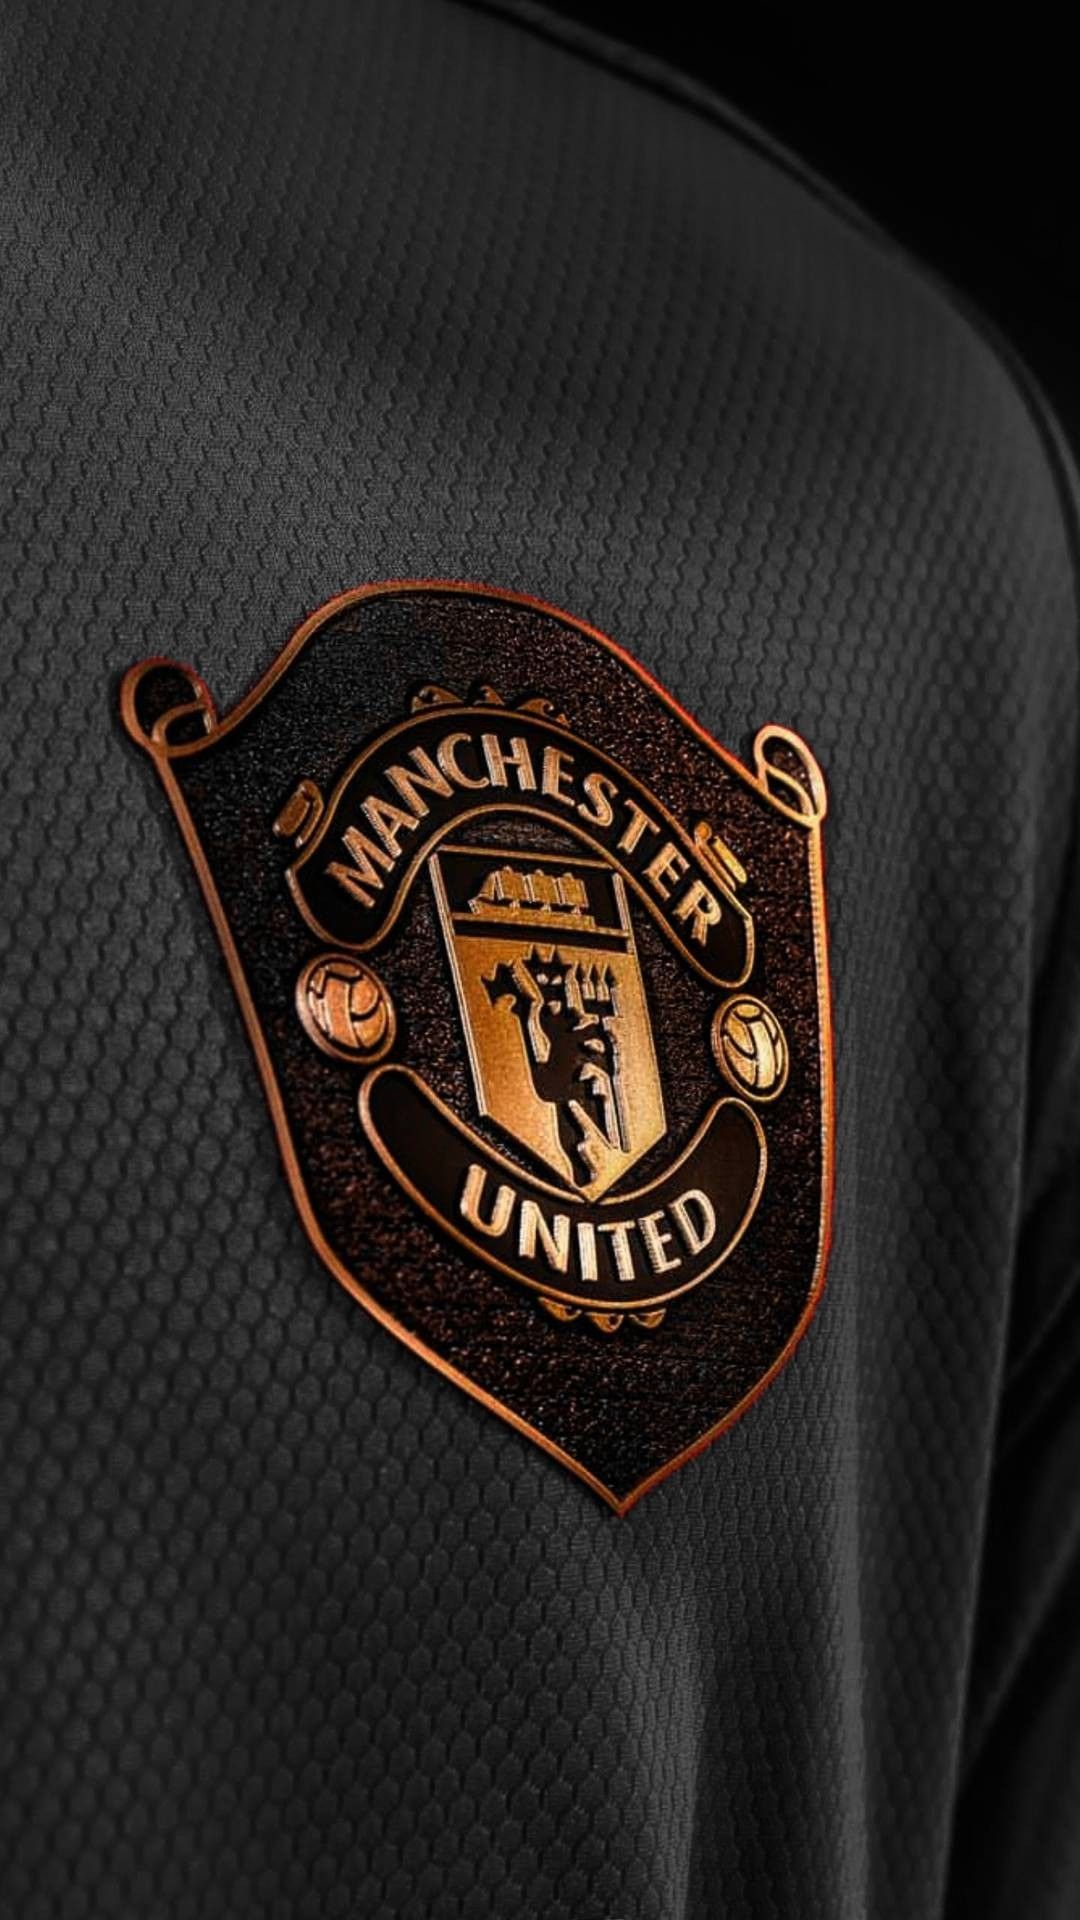 Man Utd. Manchester united wallpaper, Manchester united logo, Manchester united